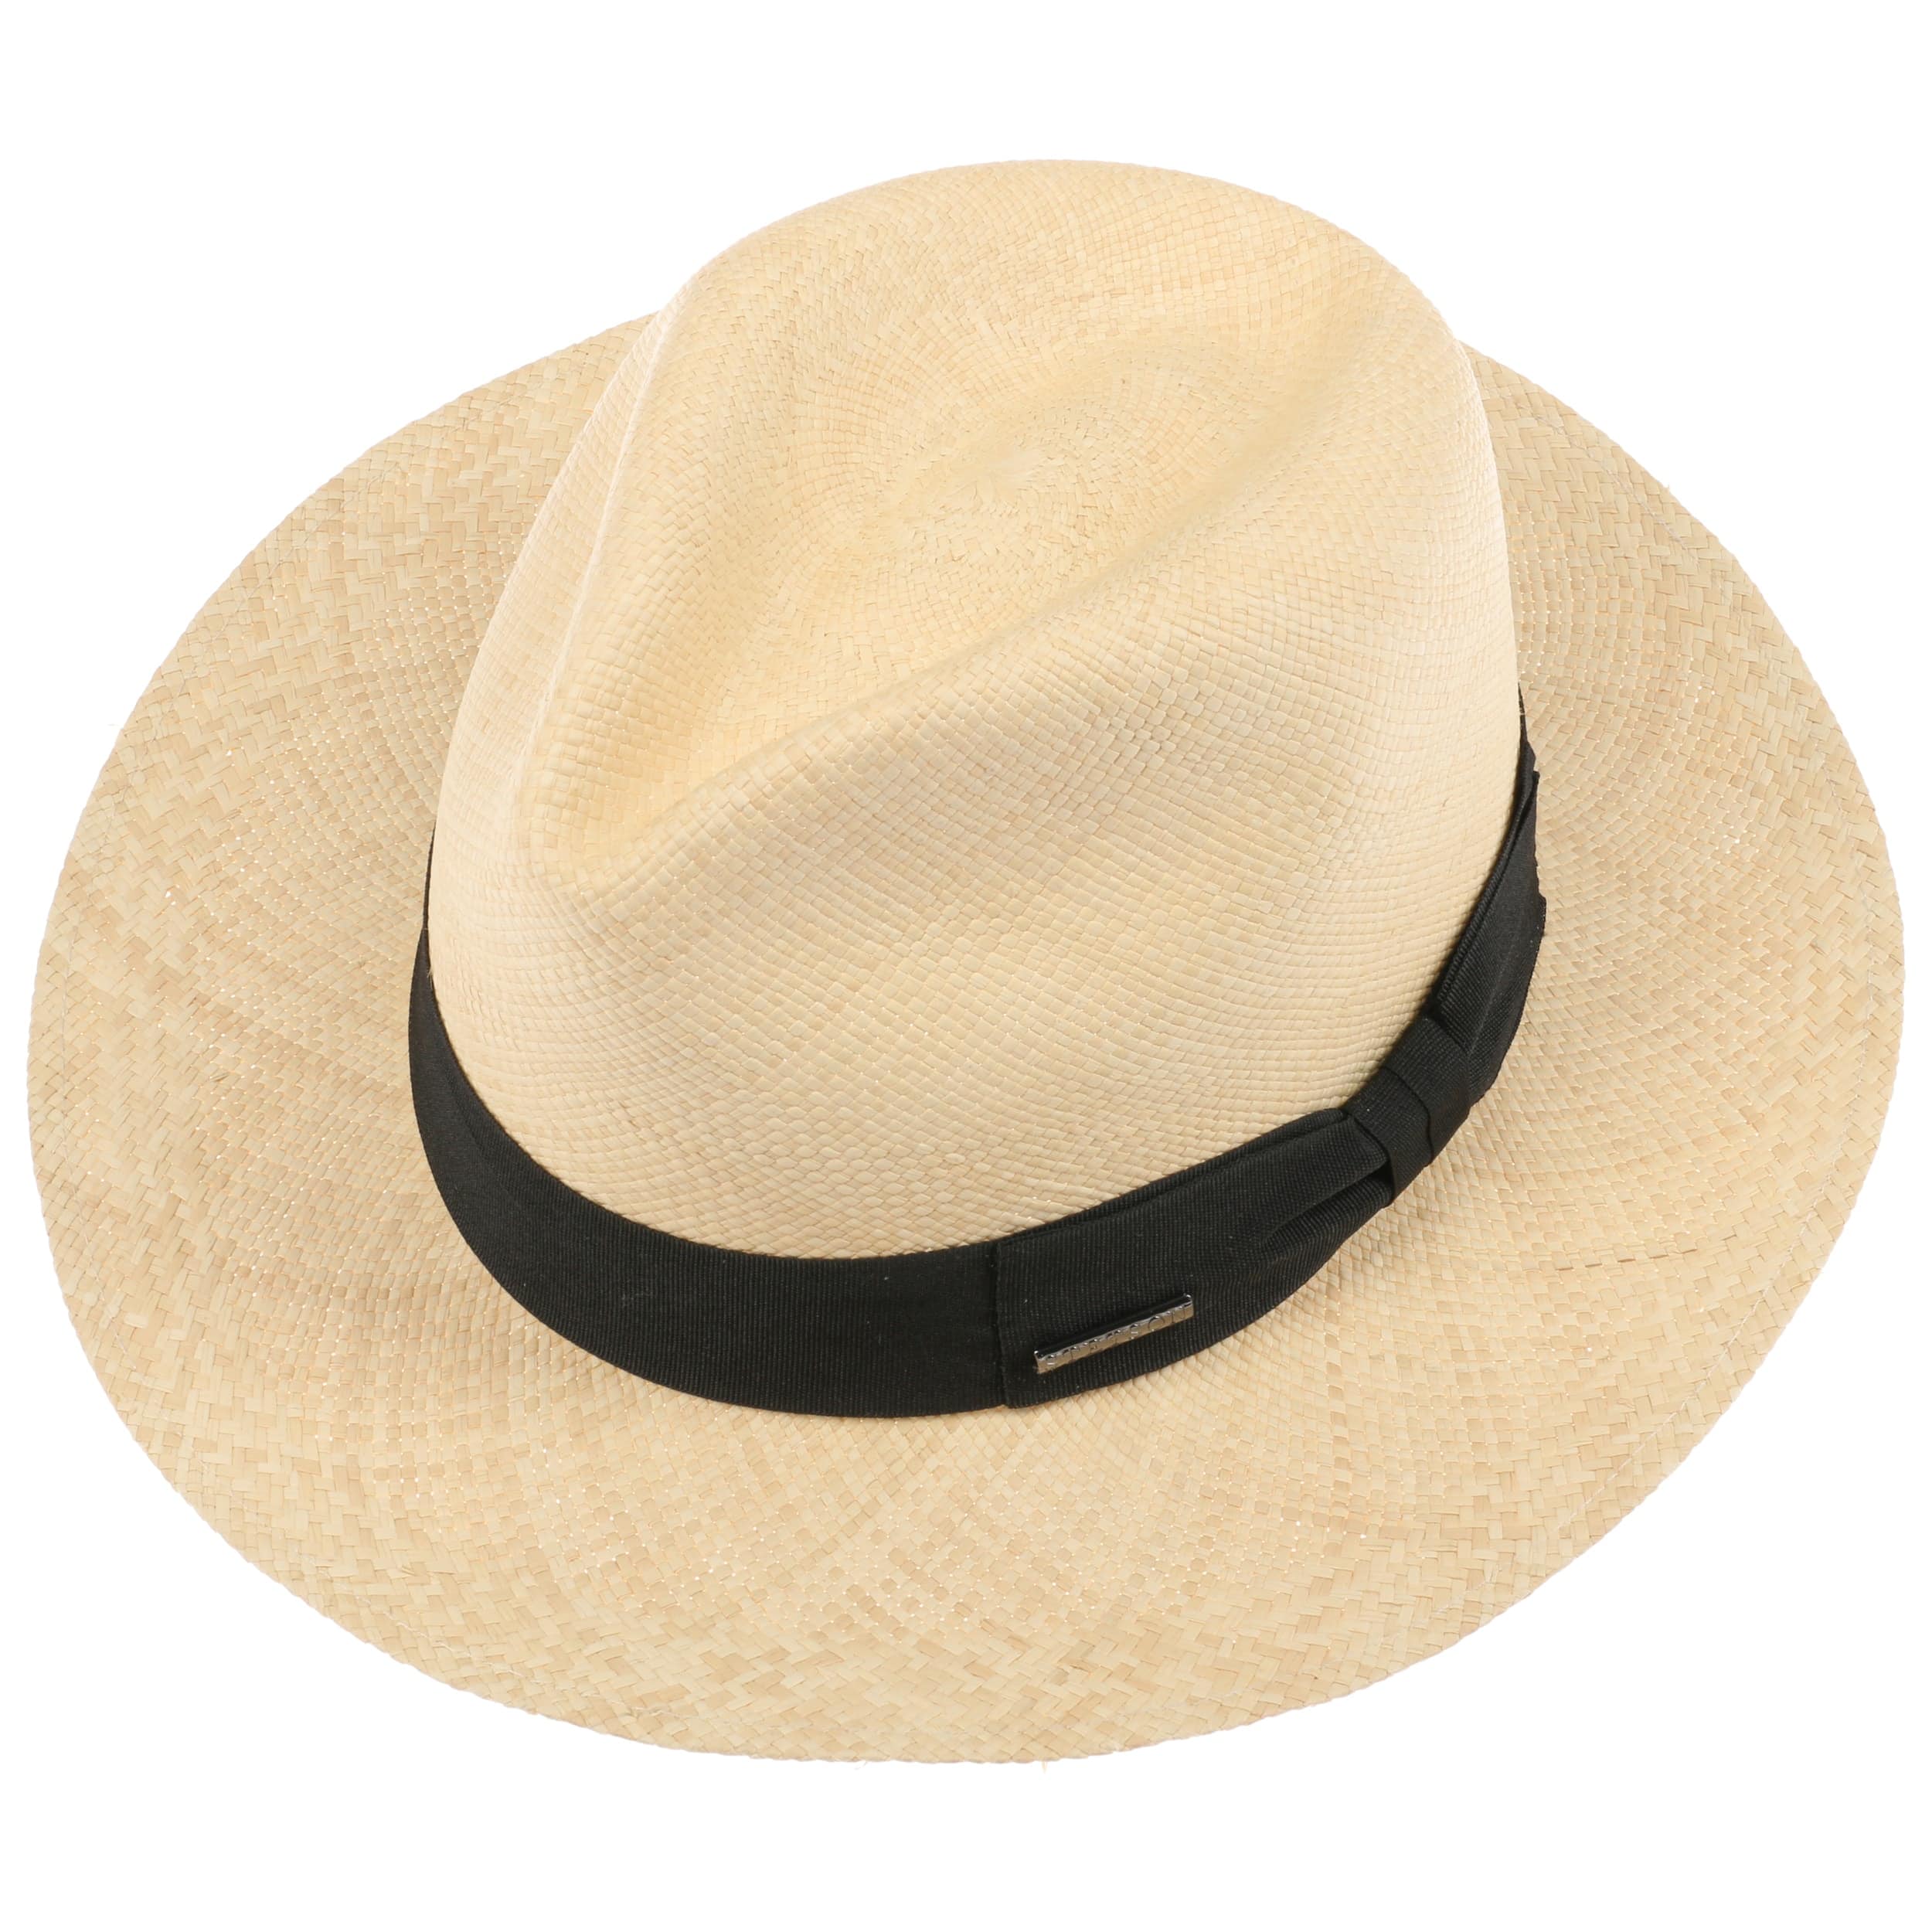 Valmora Fedora Panama Hat by Stetson, EUR 129,00 --> Hats, caps ...